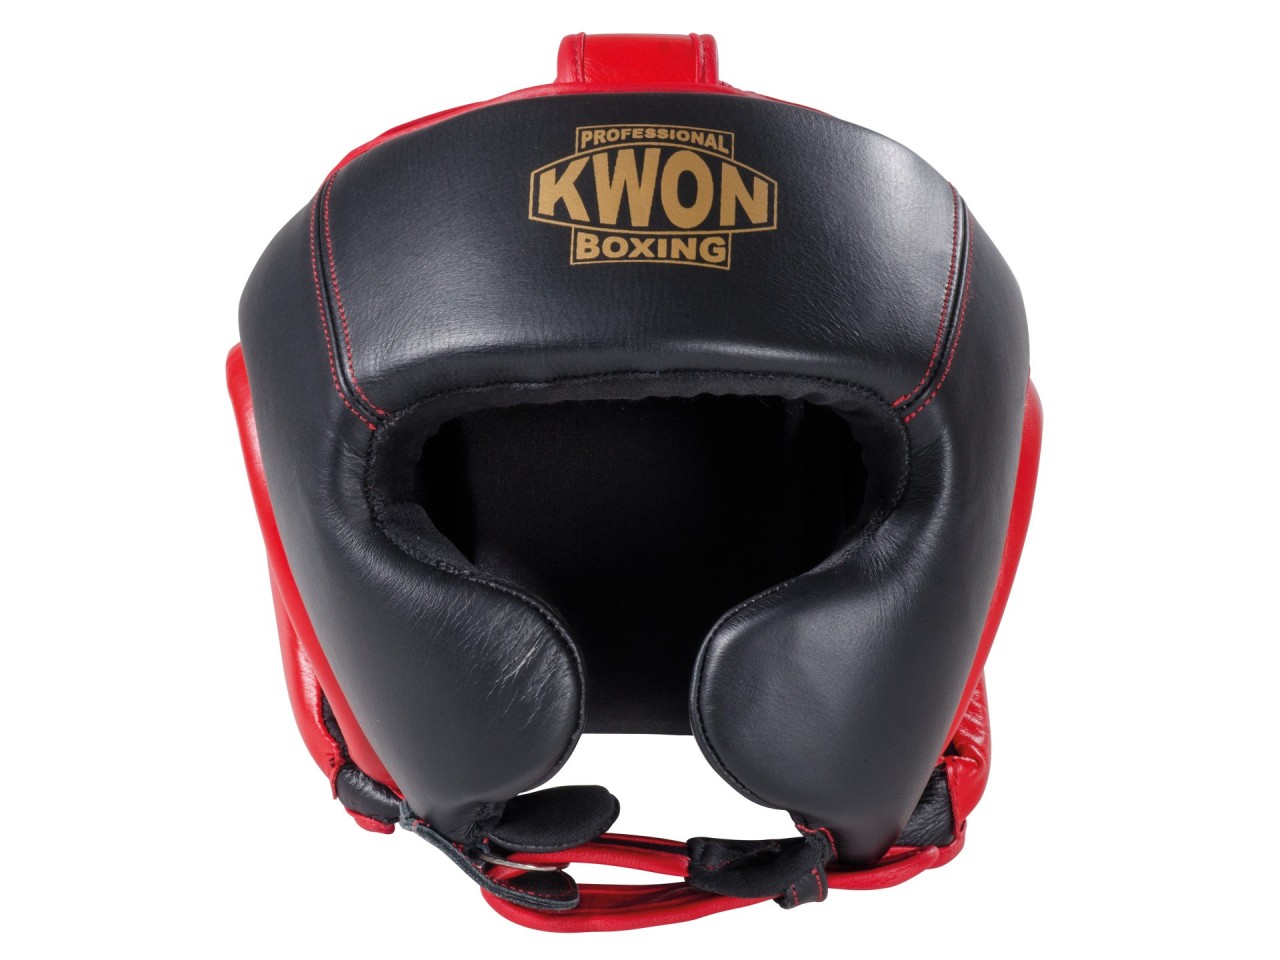 KWON Echtleder Kopfschutz Protect von KWON PROFESSIONAL BOXING